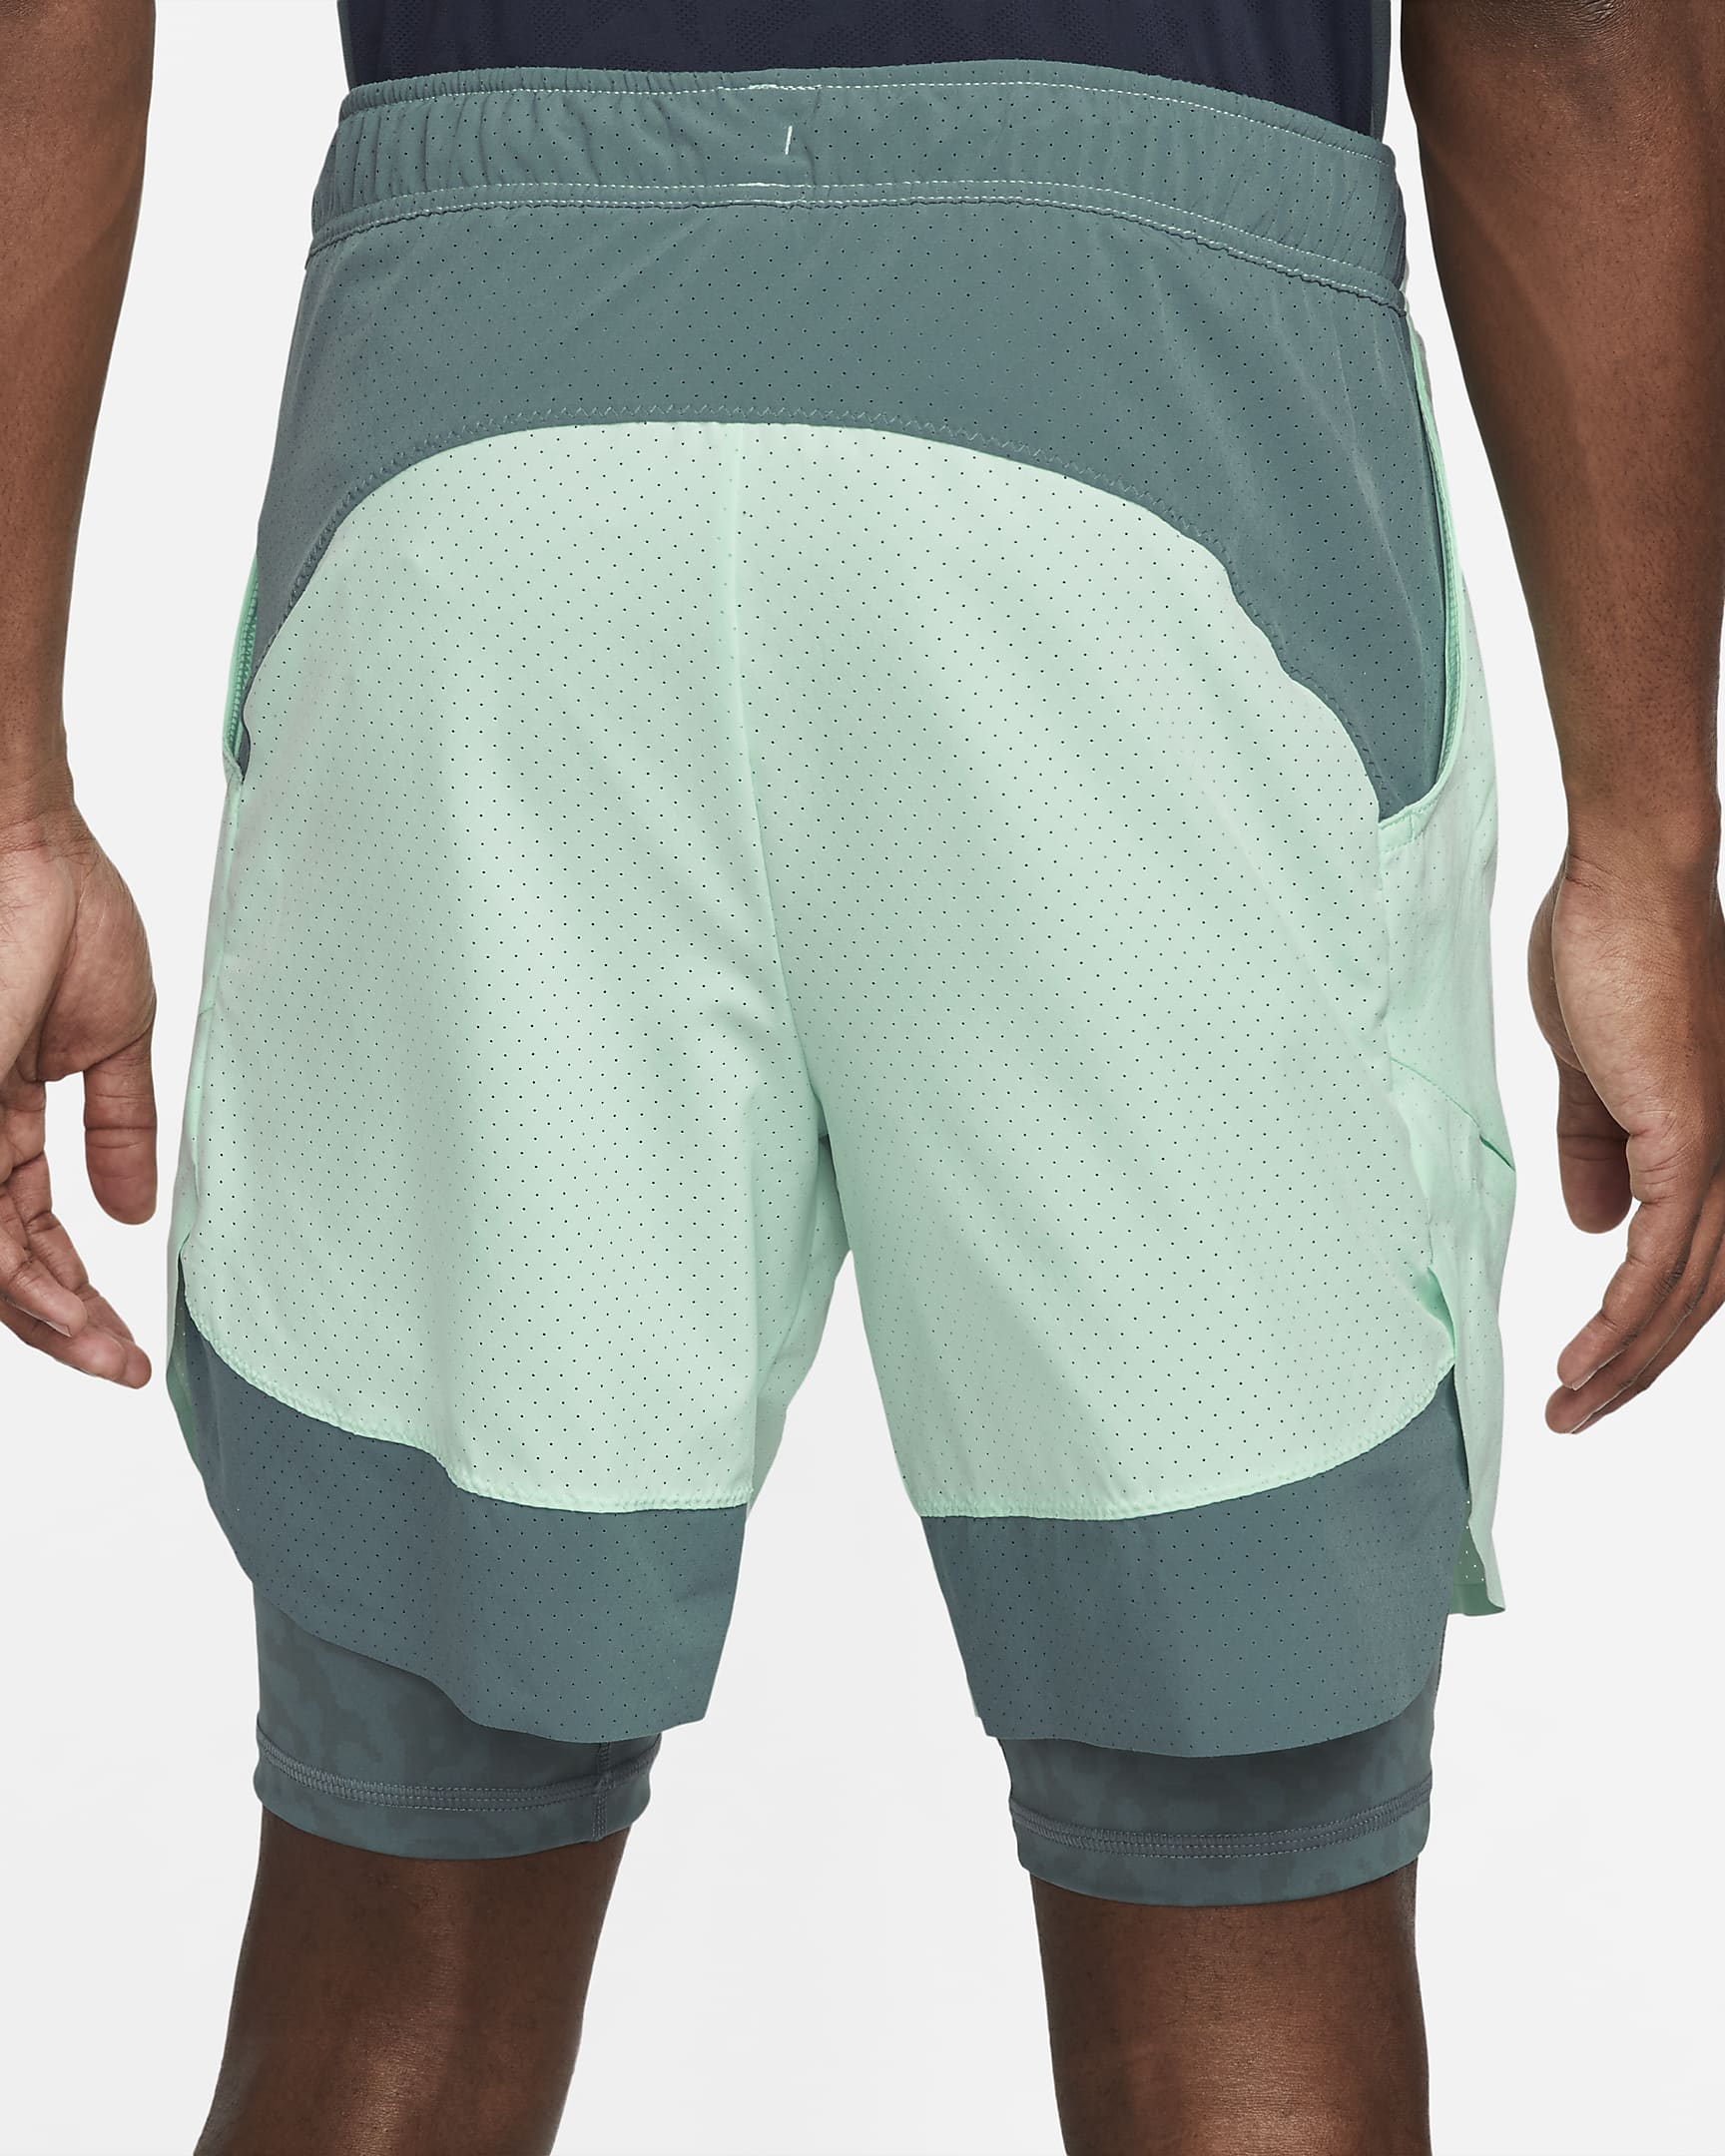 nikecourt-dri-fit-slam-2-in-1-tennis-shorts-h1GJWW.png